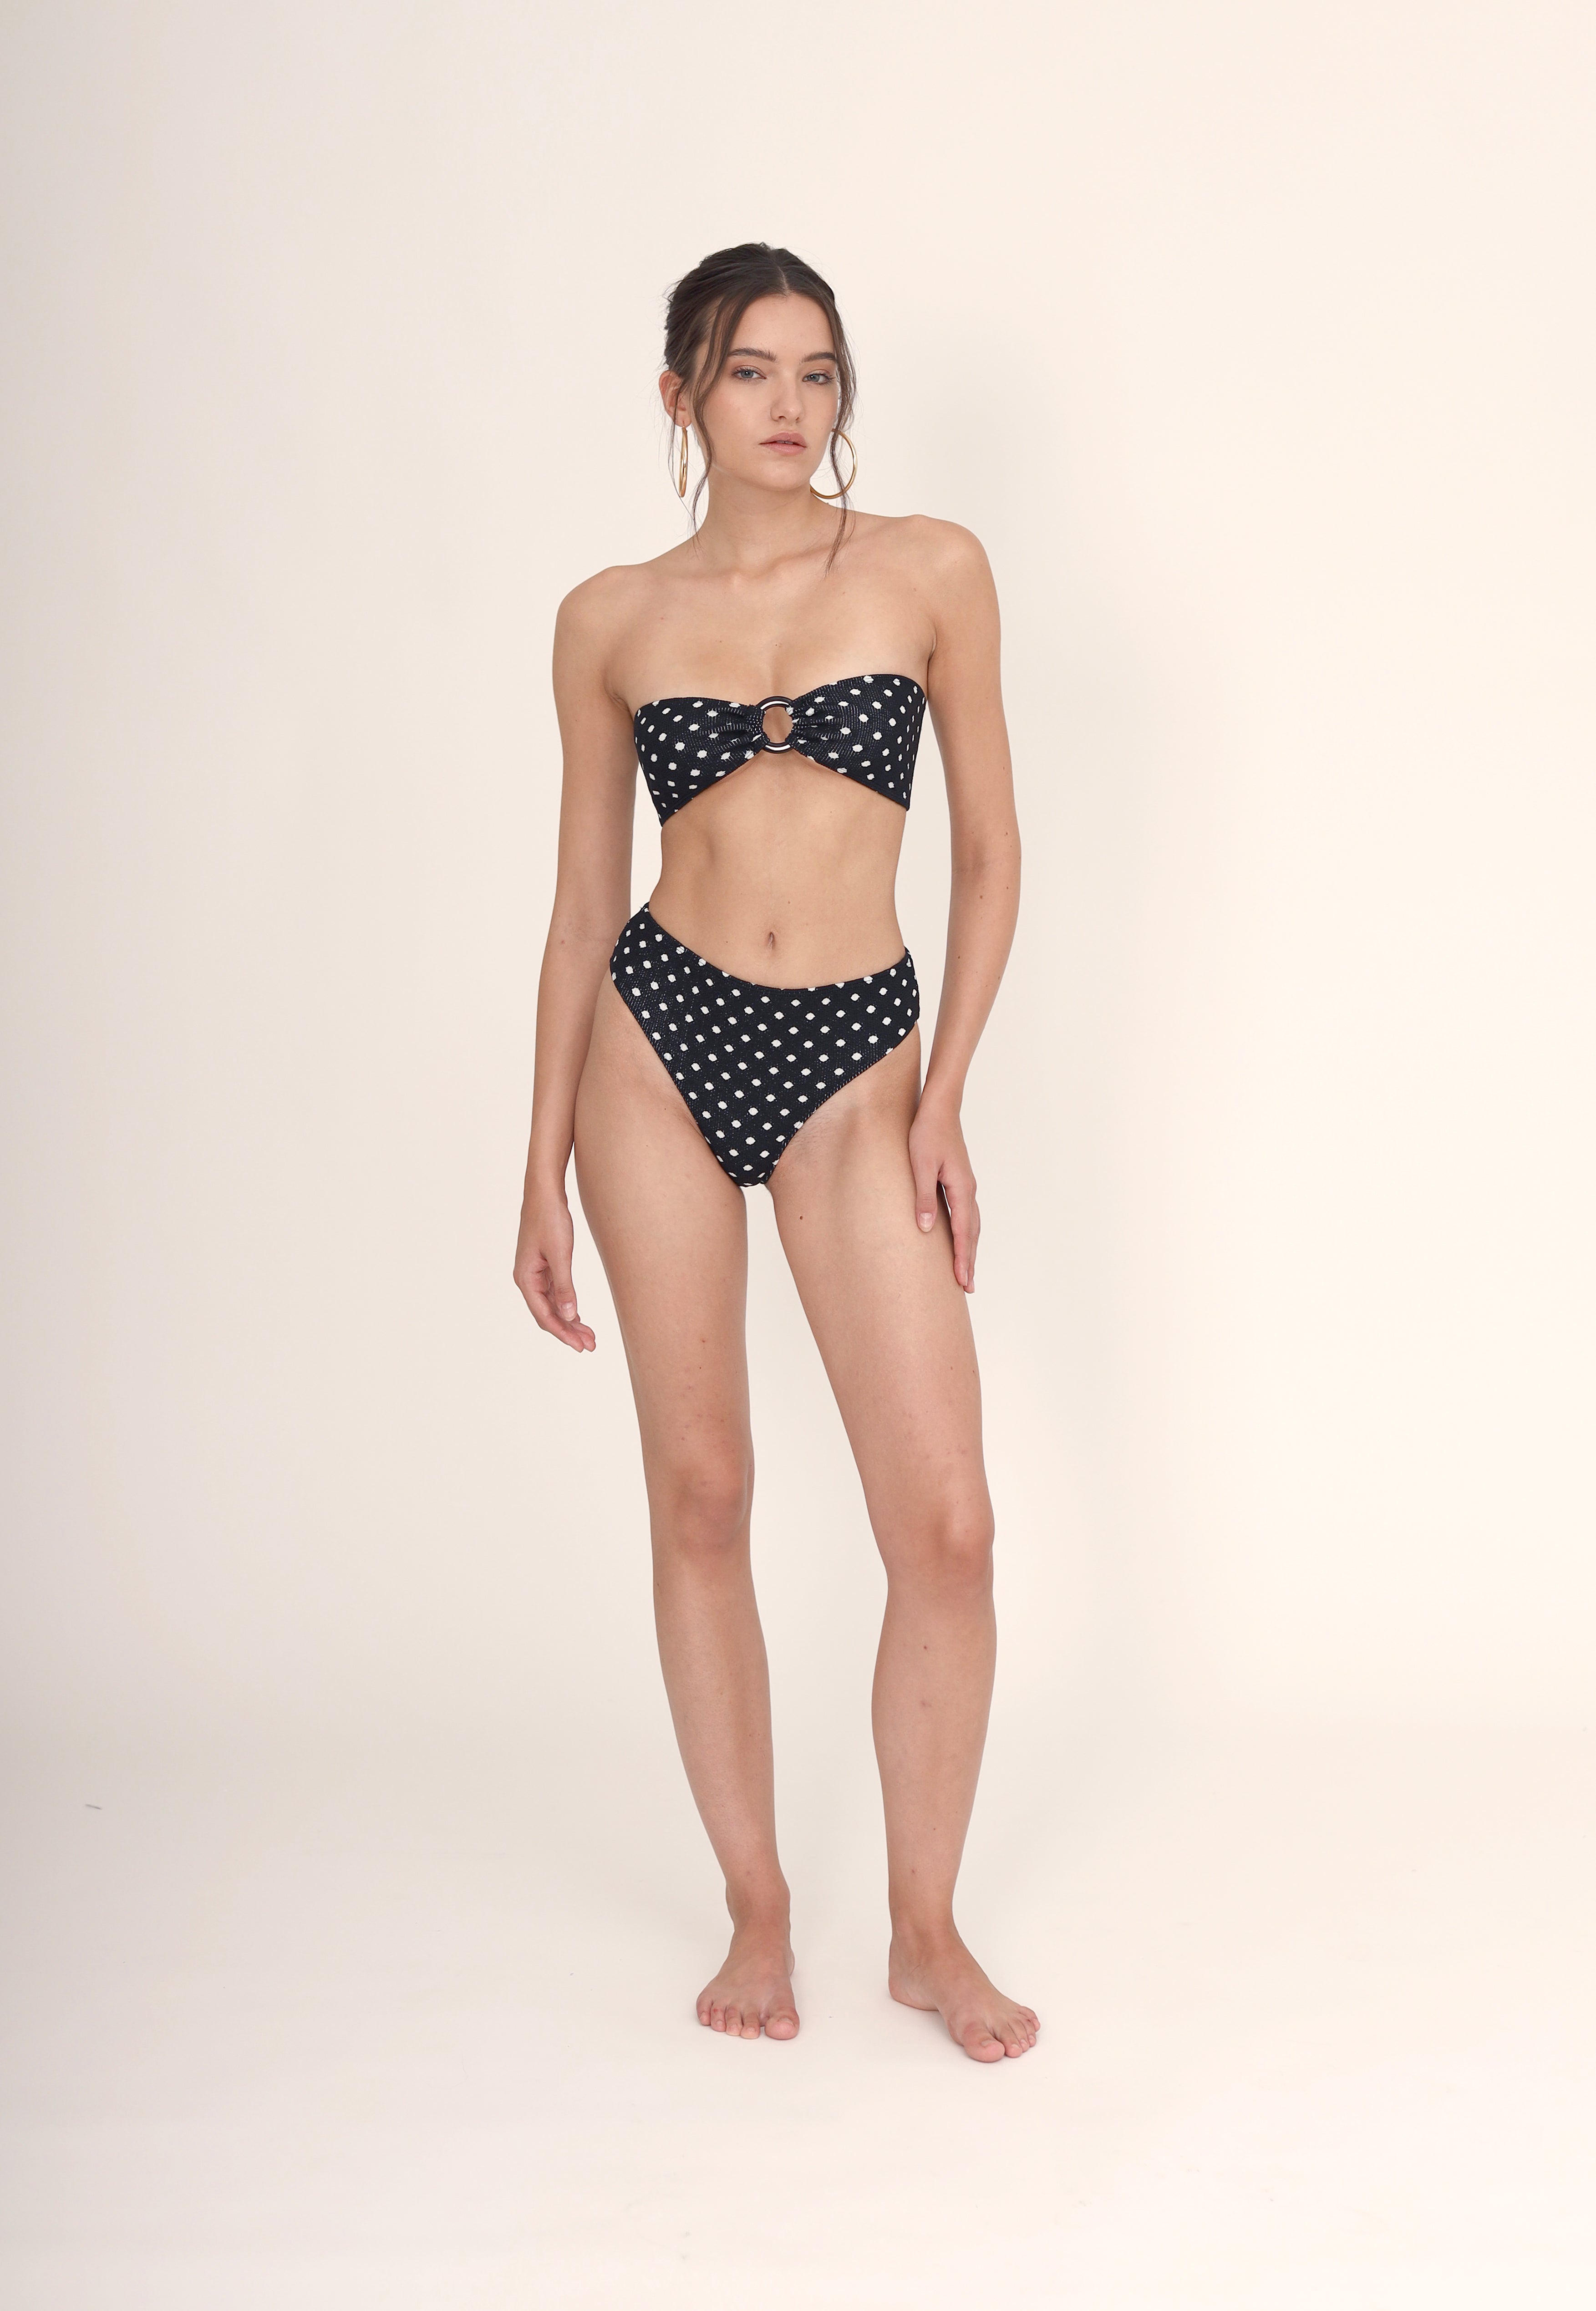 Maria bikini set - Black and white dots